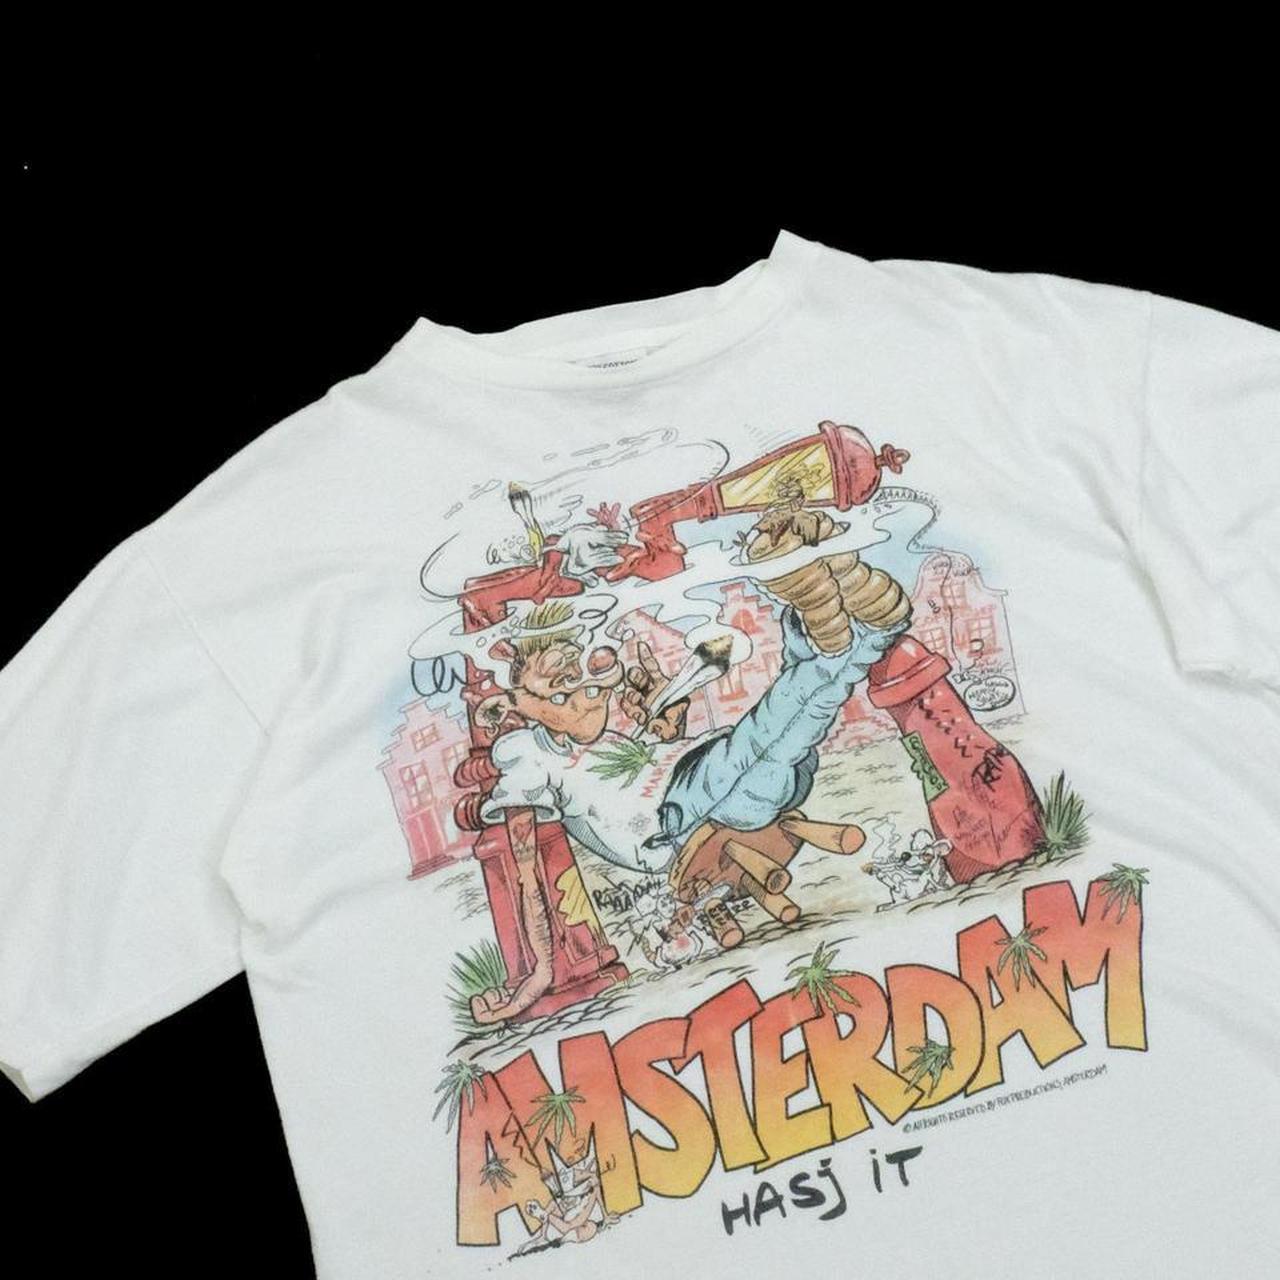 Amsterdam T-shirt